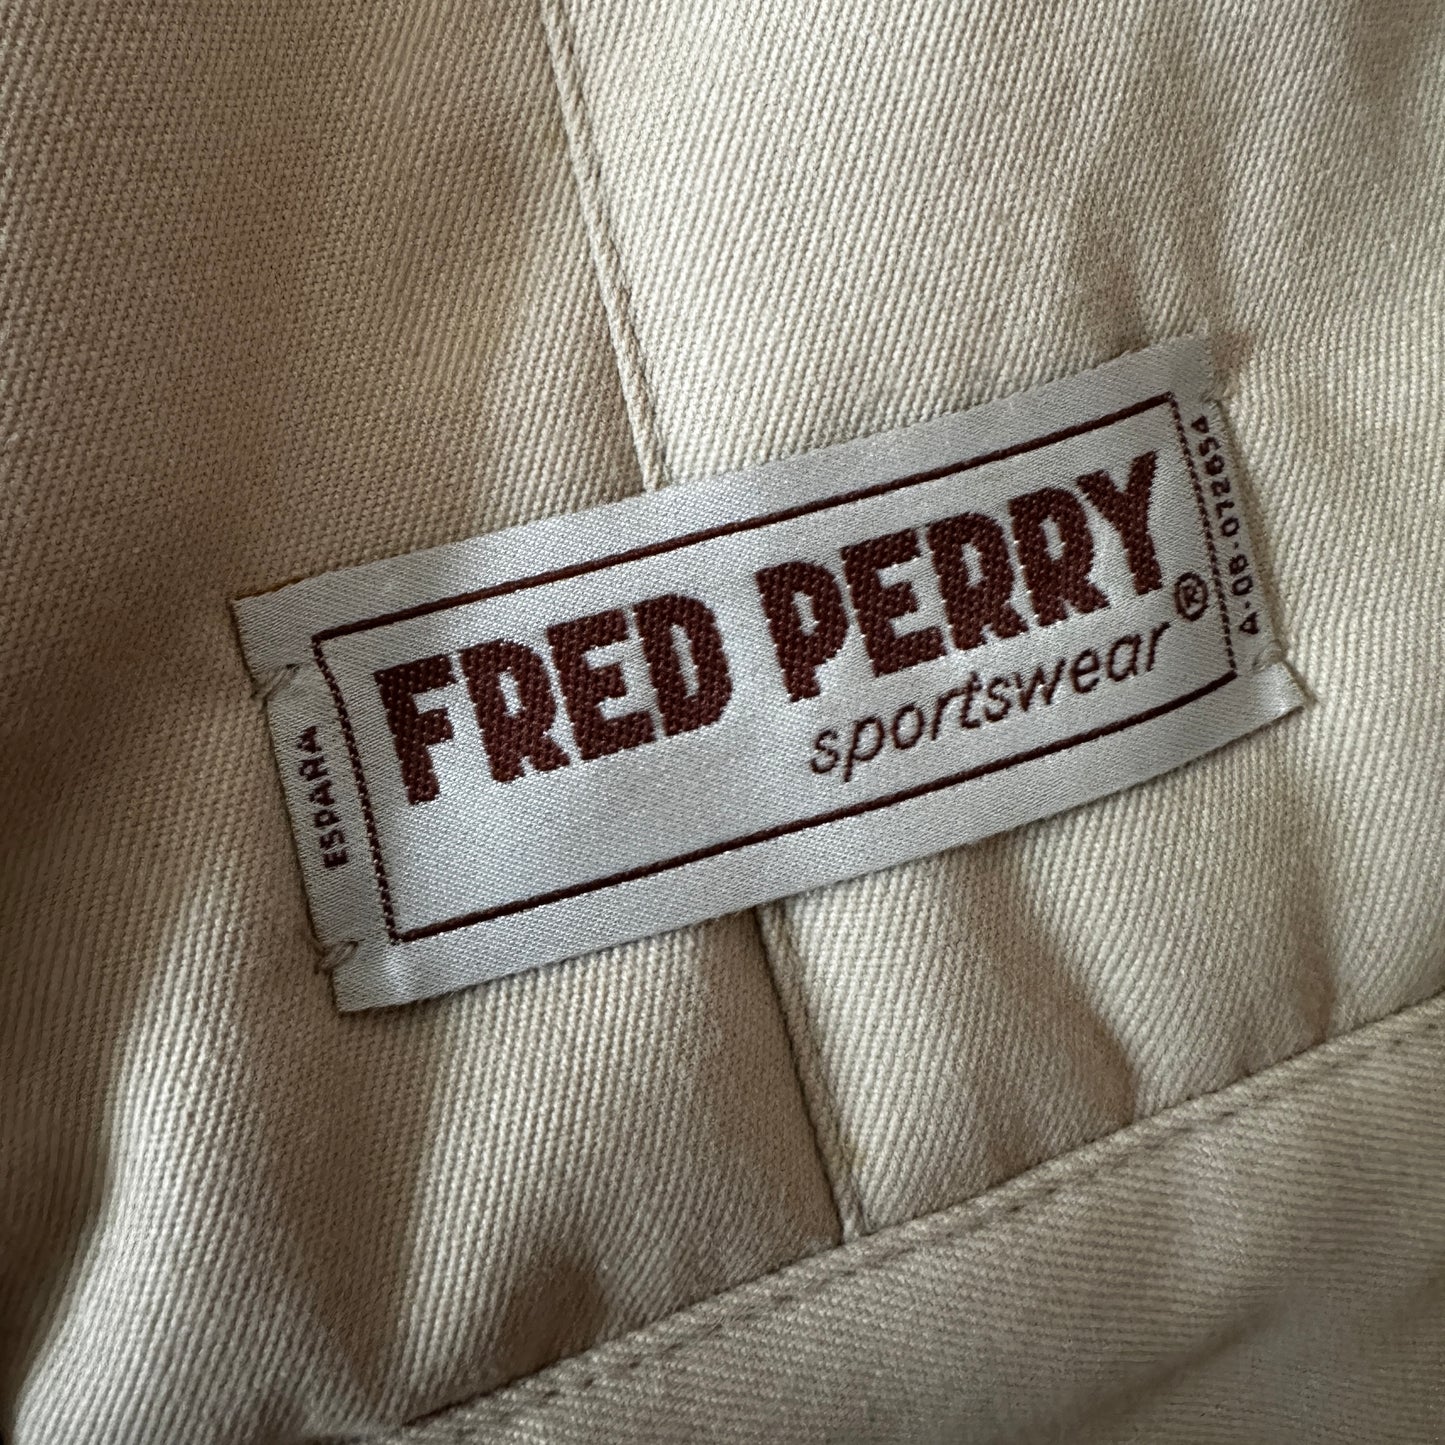 Fred Perry Vintage 80s Anorak Light-beige - Deadstoock - 54 / L - Made in Spain